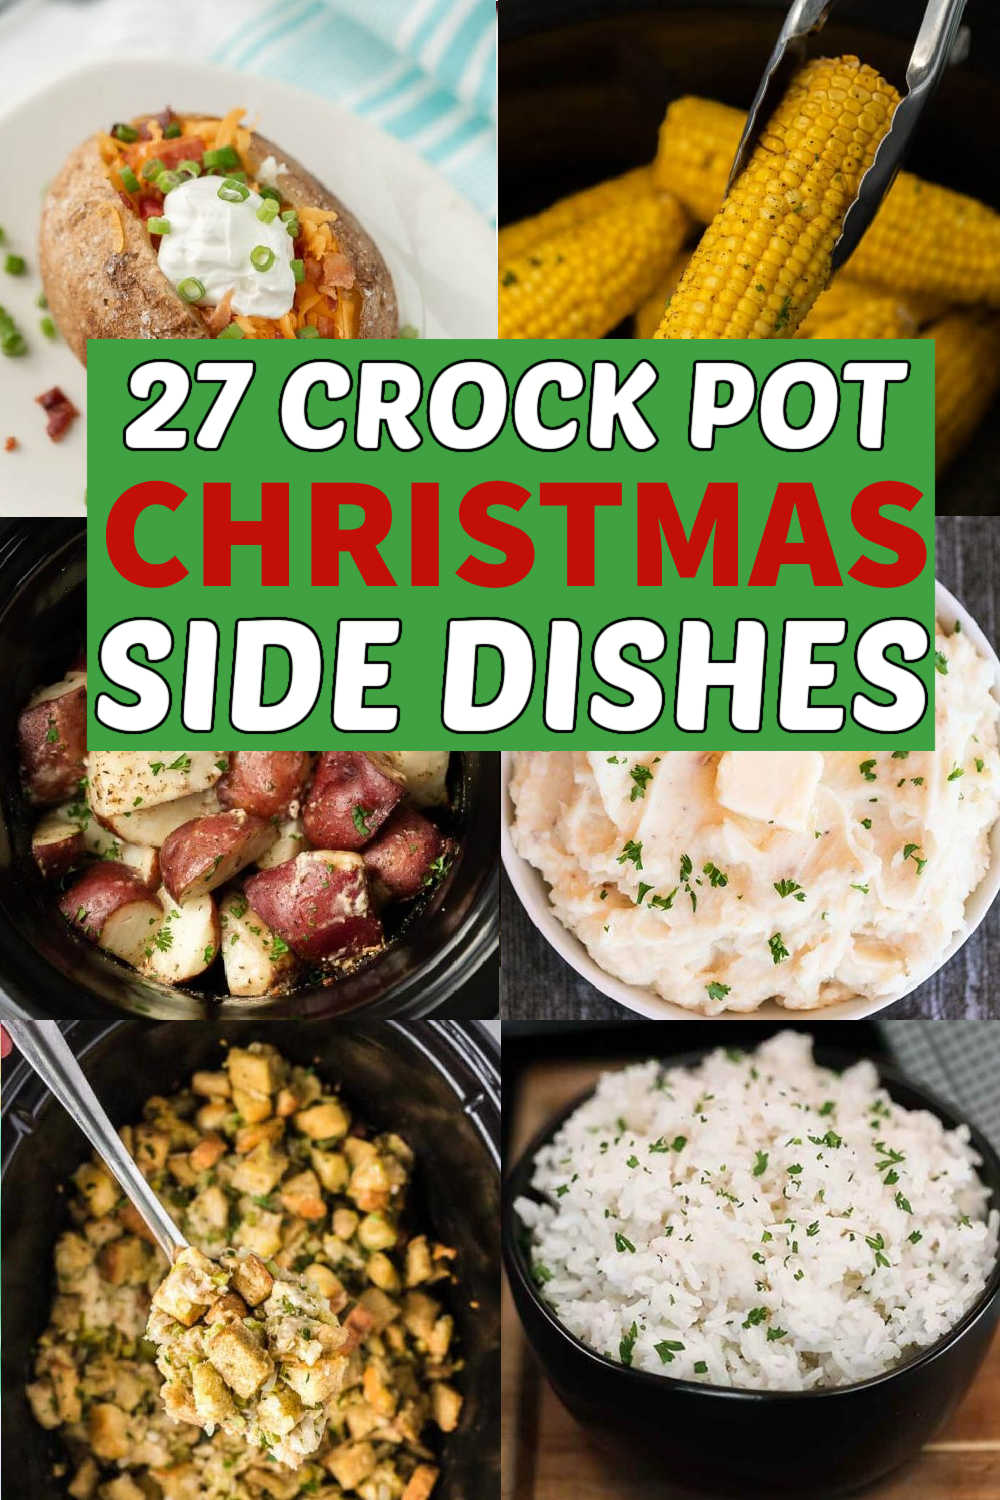 https://www.eatingonadime.com/wp-content/uploads/2022/09/Crockpot-Christmas-Side-Dish-low.jpg